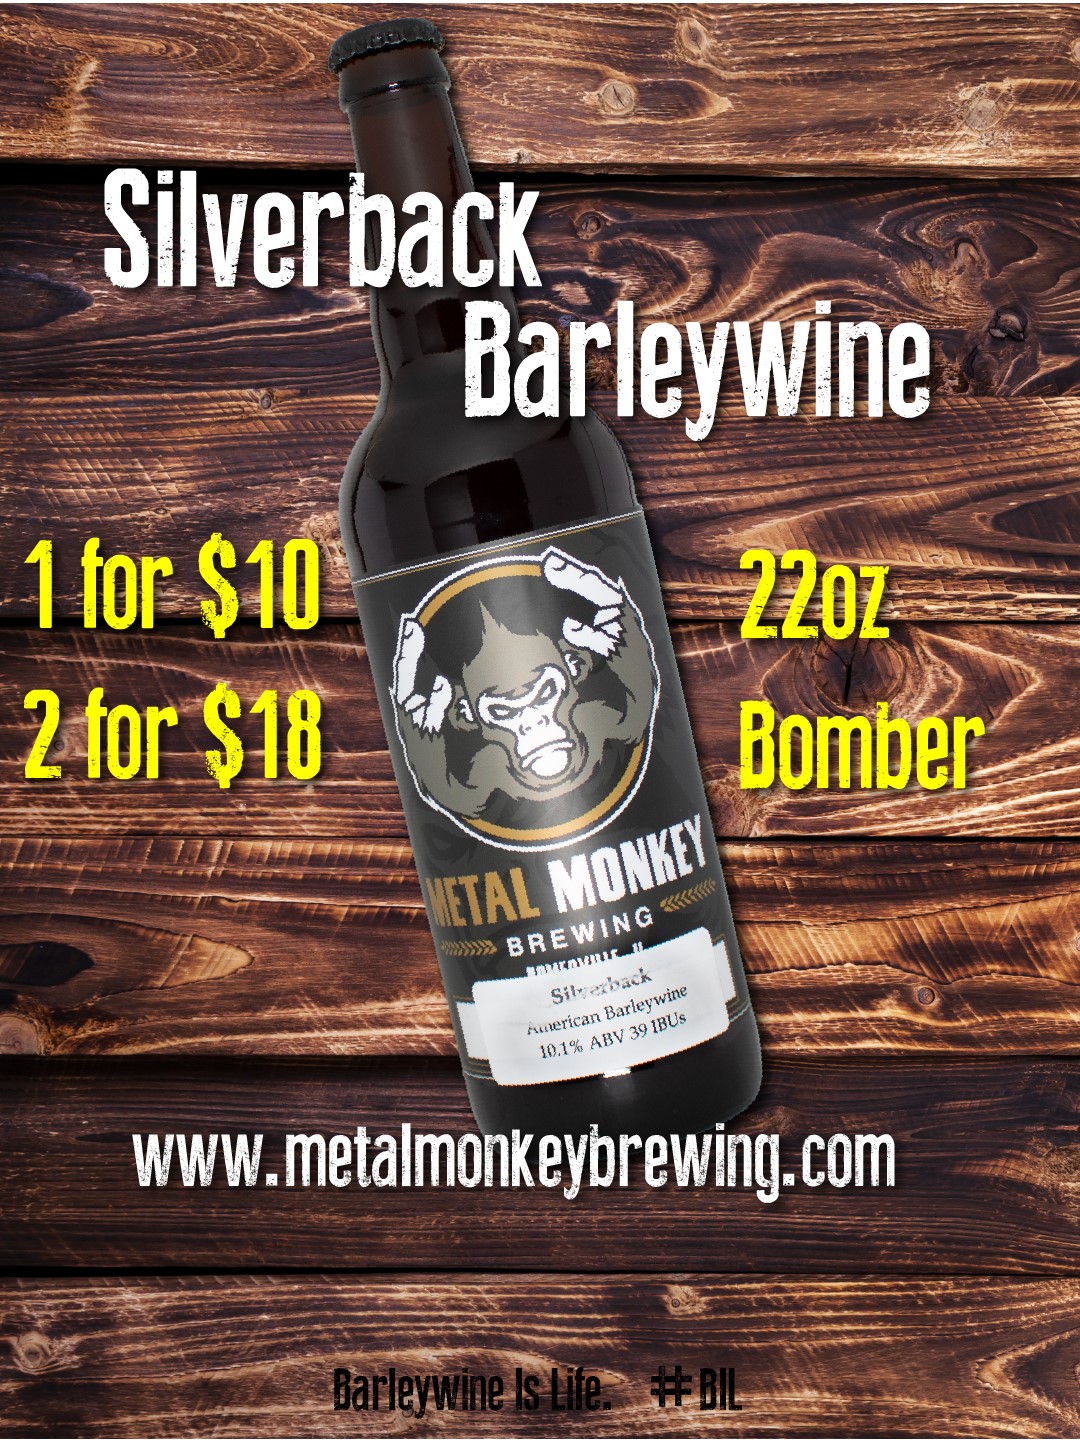 Silverback Barleywine from Metal Monkey Brewing